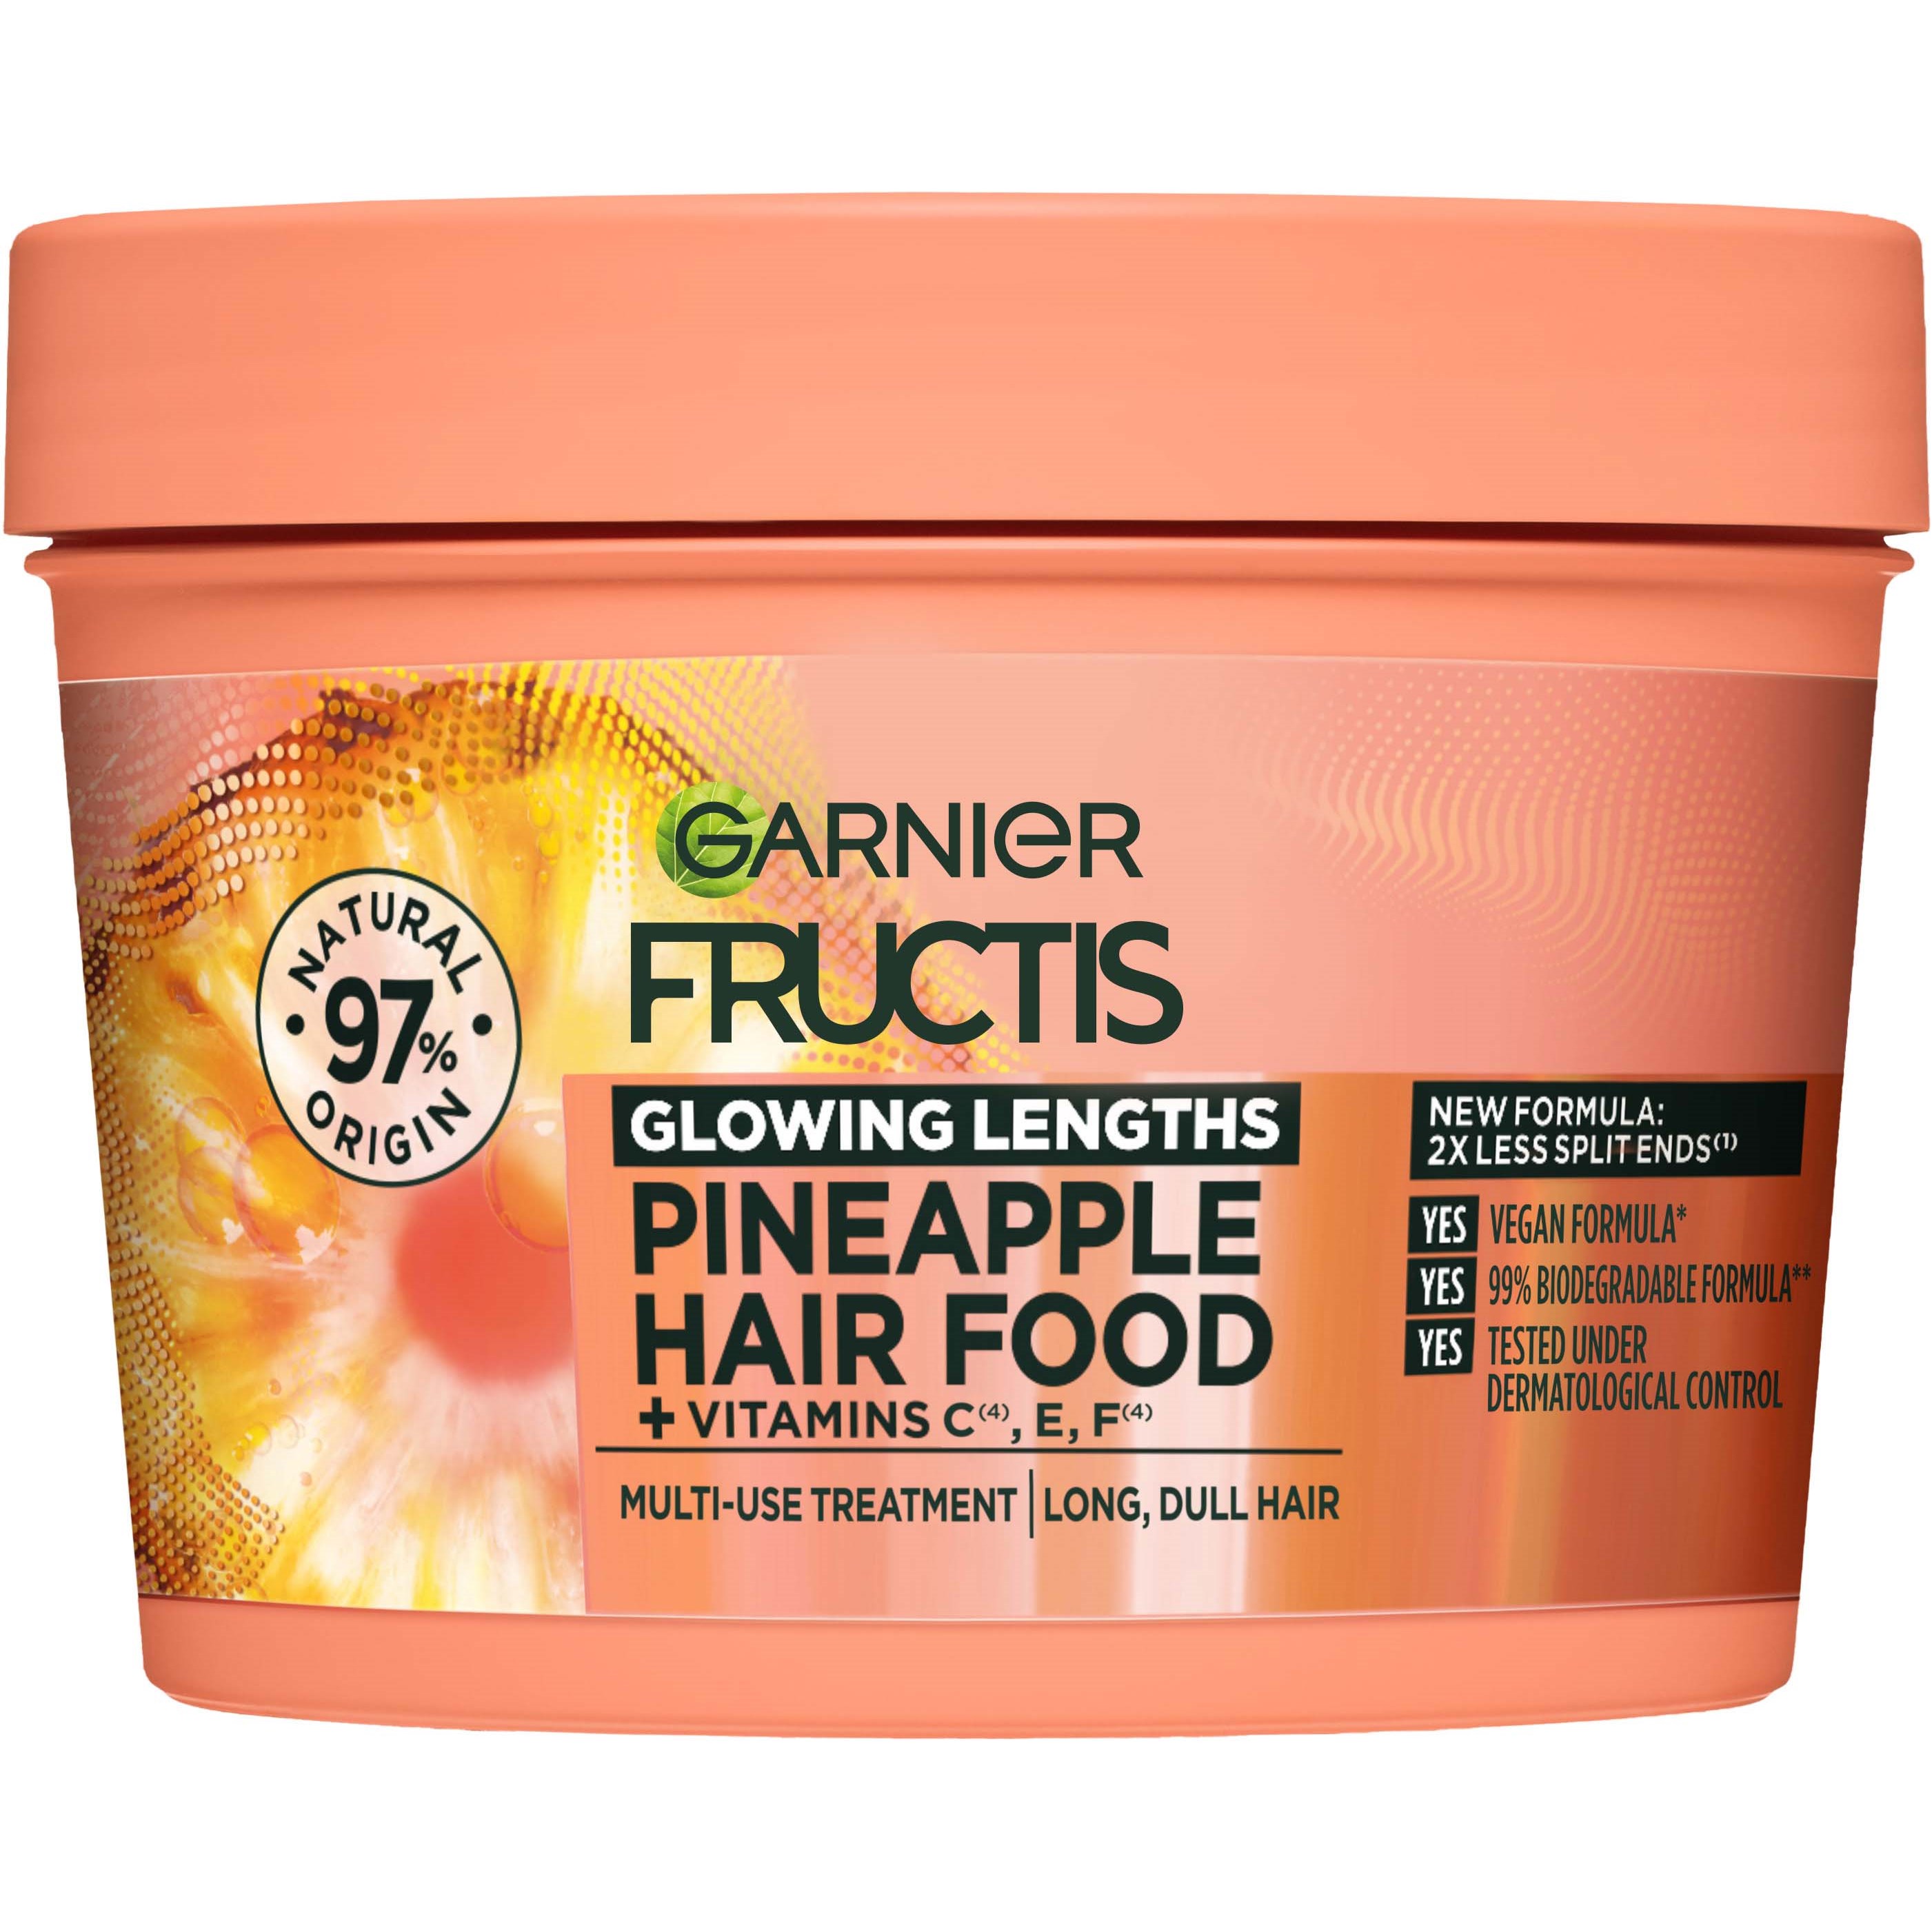 Bilde av Garnier Fructis Pineapple Hair Food Glowing Lengths Multi-use Treatmen